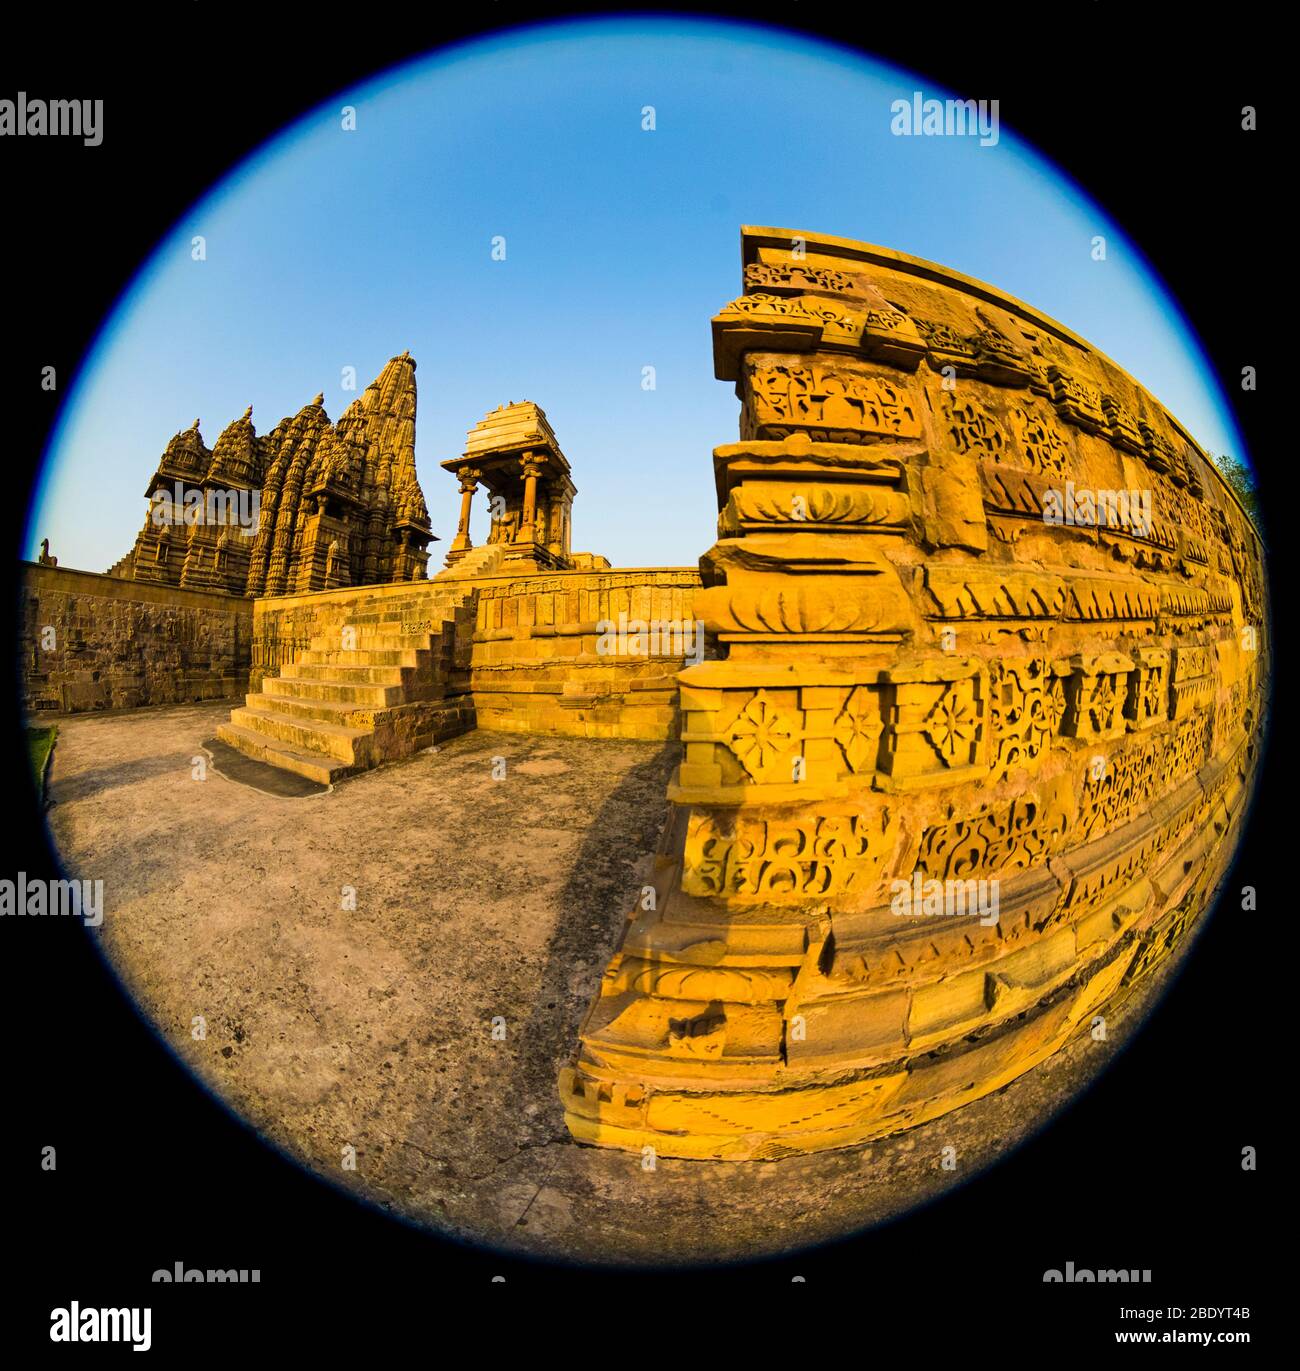 Khajuraho temples, Chhatarpur, Madhya Pradesh, India Stock Photo